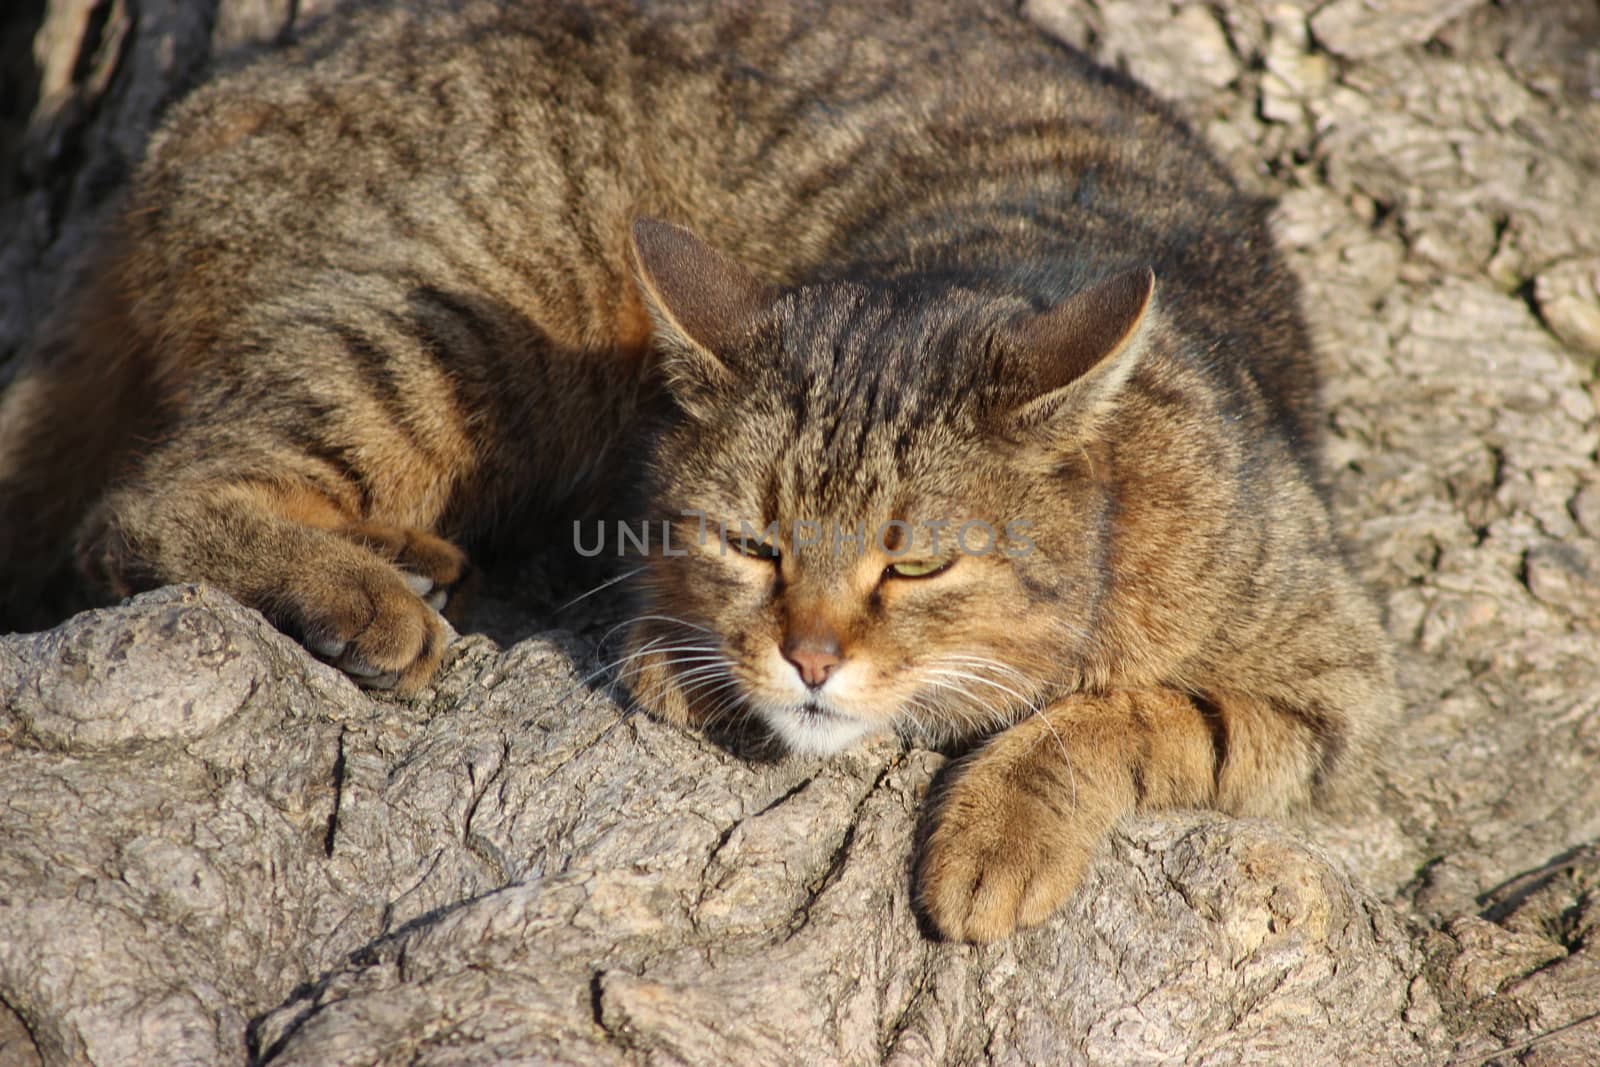 Wild sleeping cat - Nessebar Bulgaria by bensib